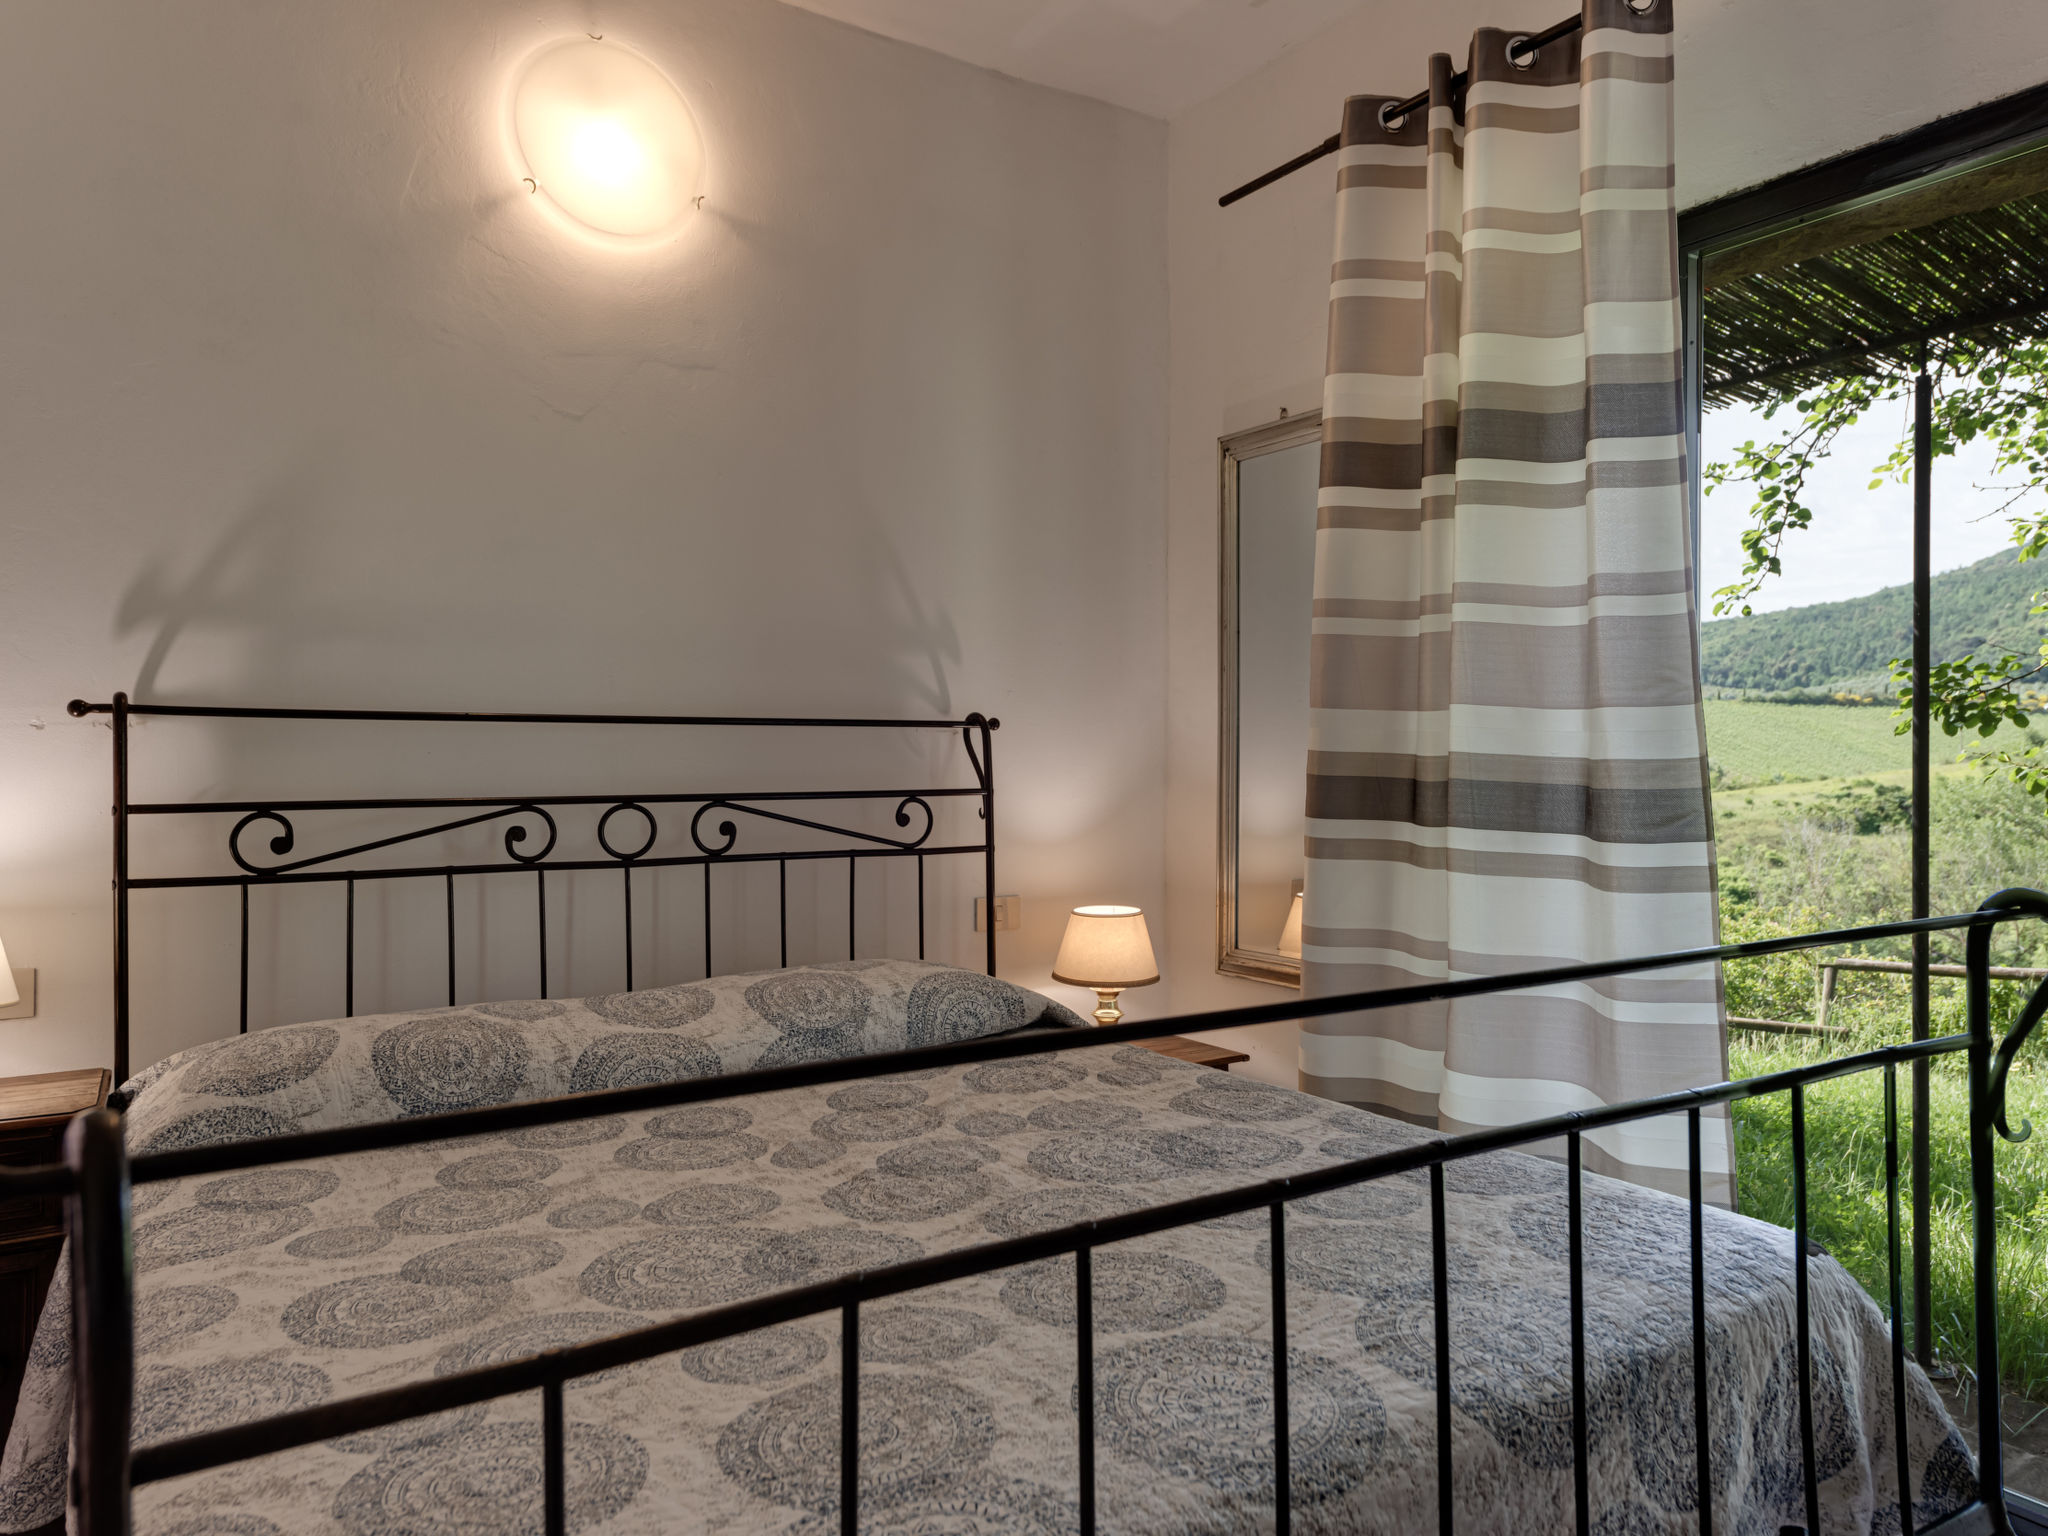 Foto 50 - Casa con 4 camere da letto a San Gimignano con piscina e giardino